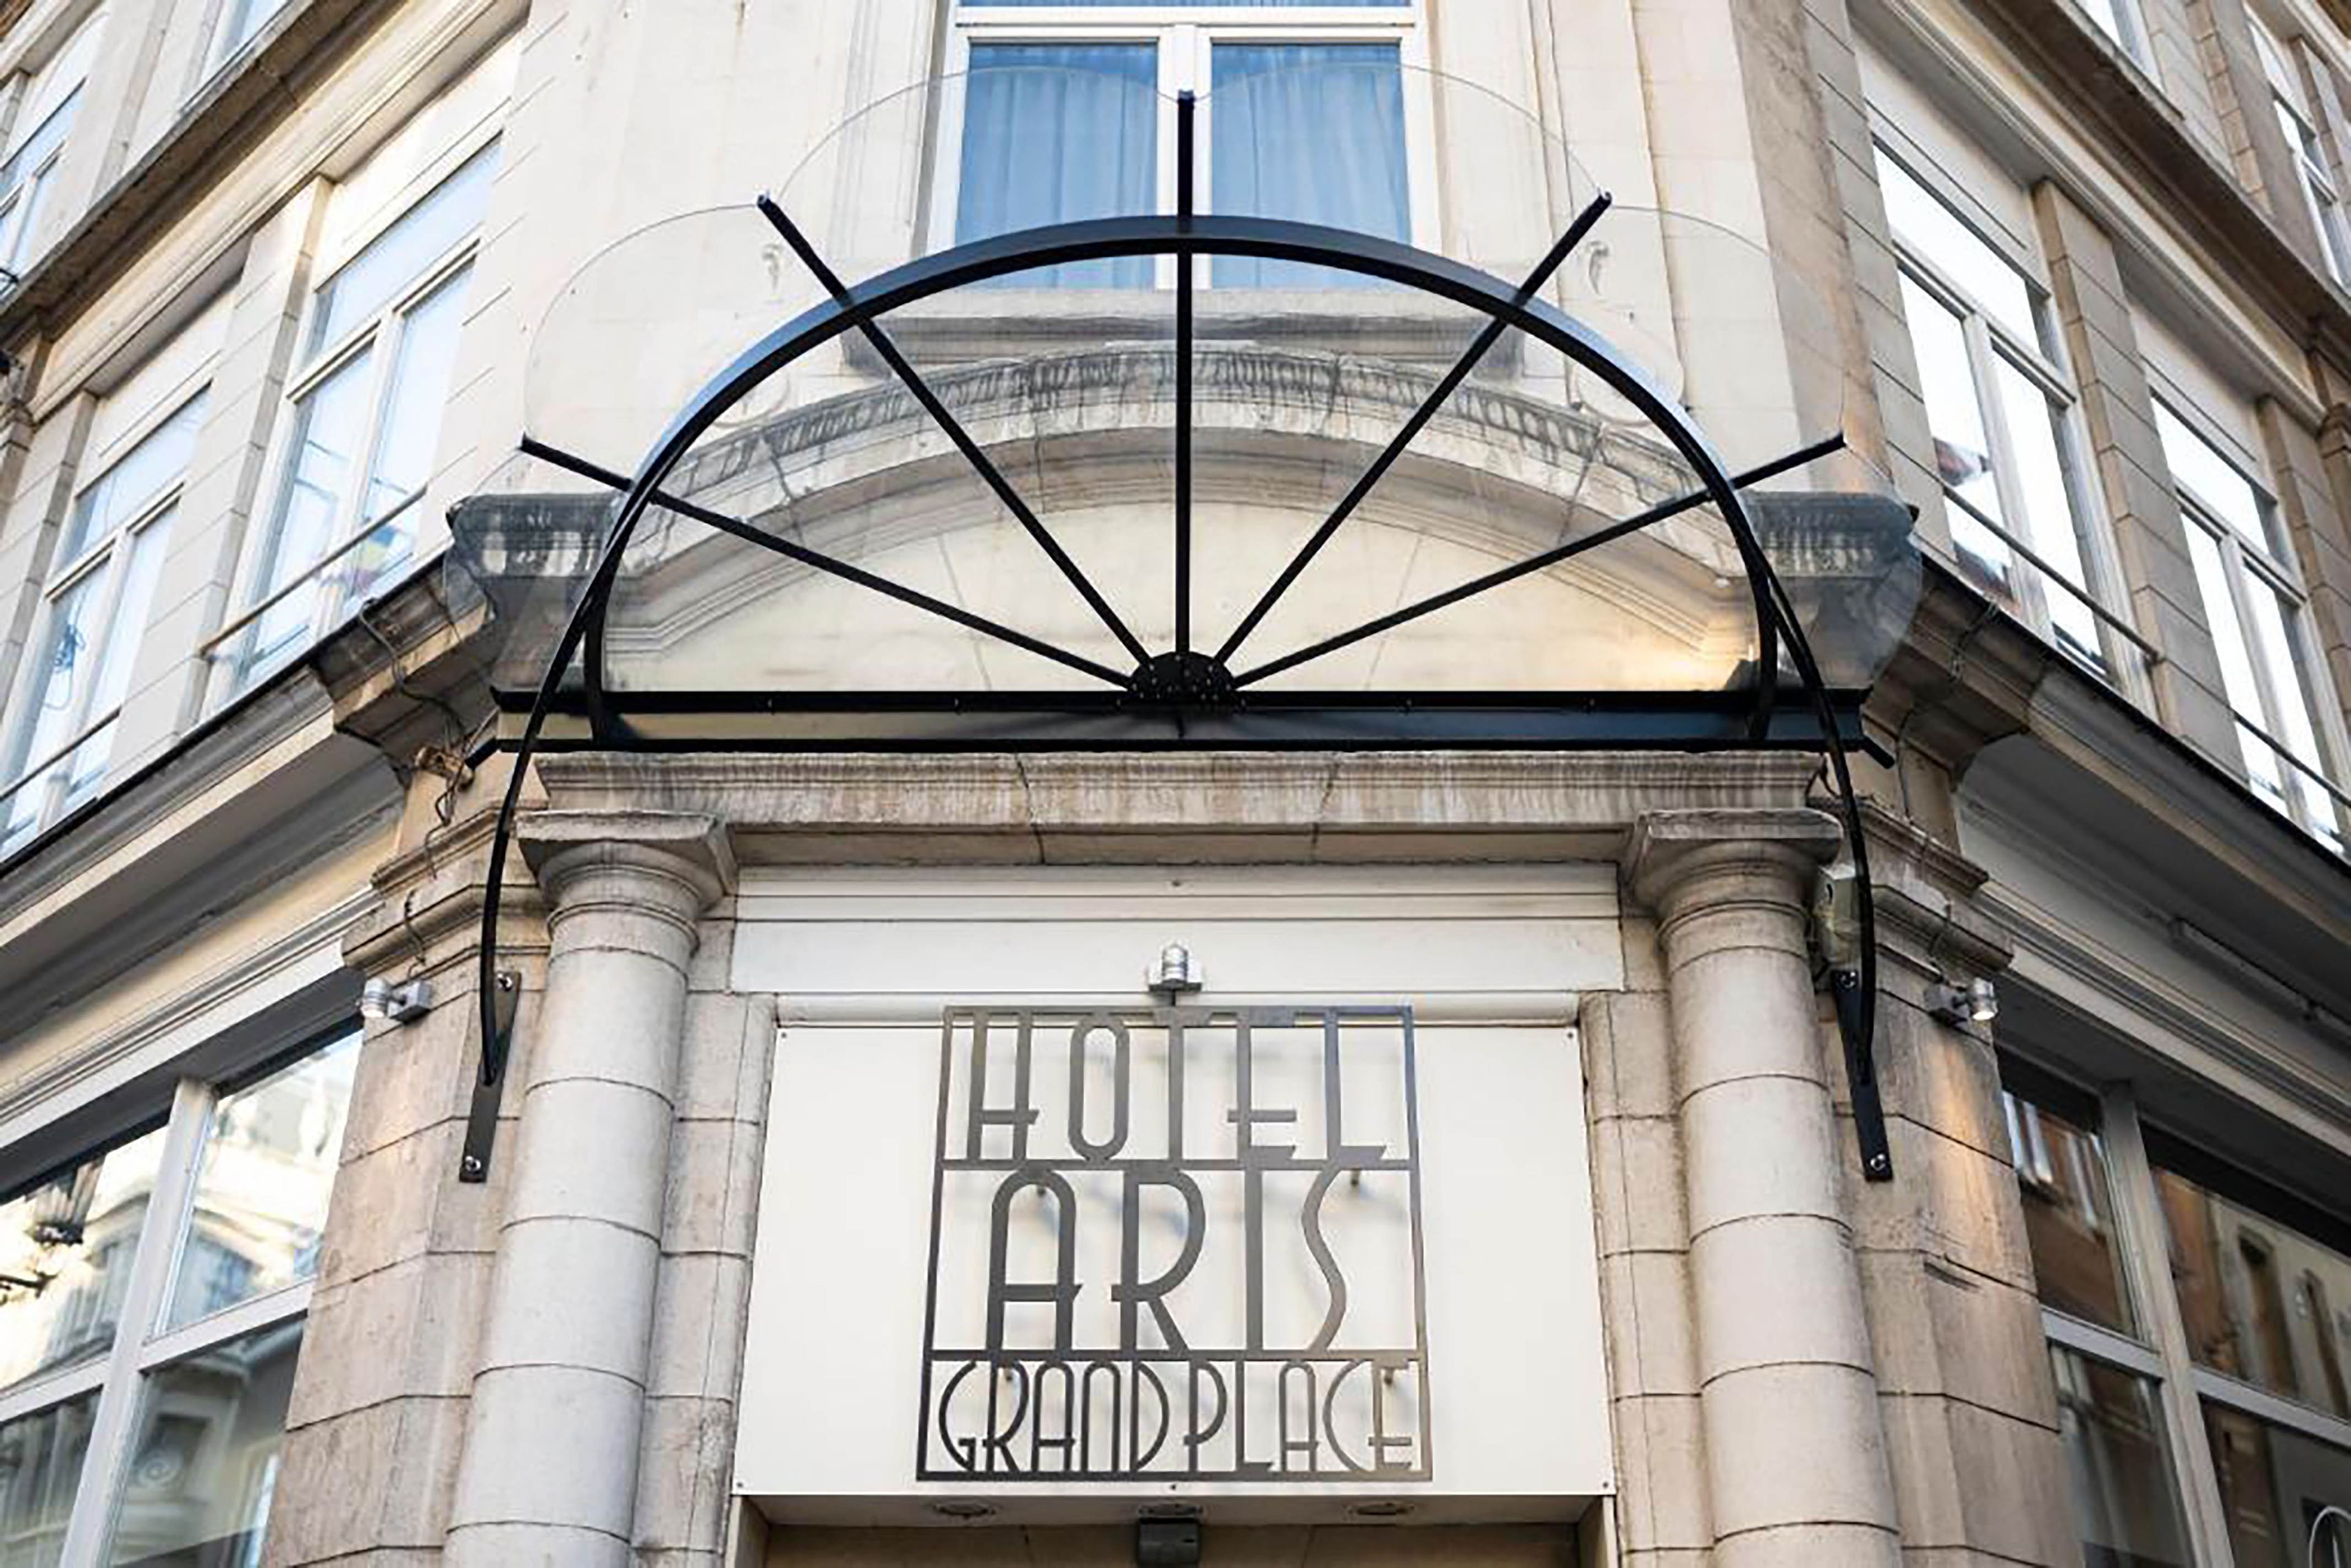 Aris Grand Place Hotel <br/>90.00 ew <br/> <a href='http://vakantieoplossing.nl/outpage/?id=d7573205ac19e5e287da1a34de9f5f3b' target='_blank'>View Details</a>